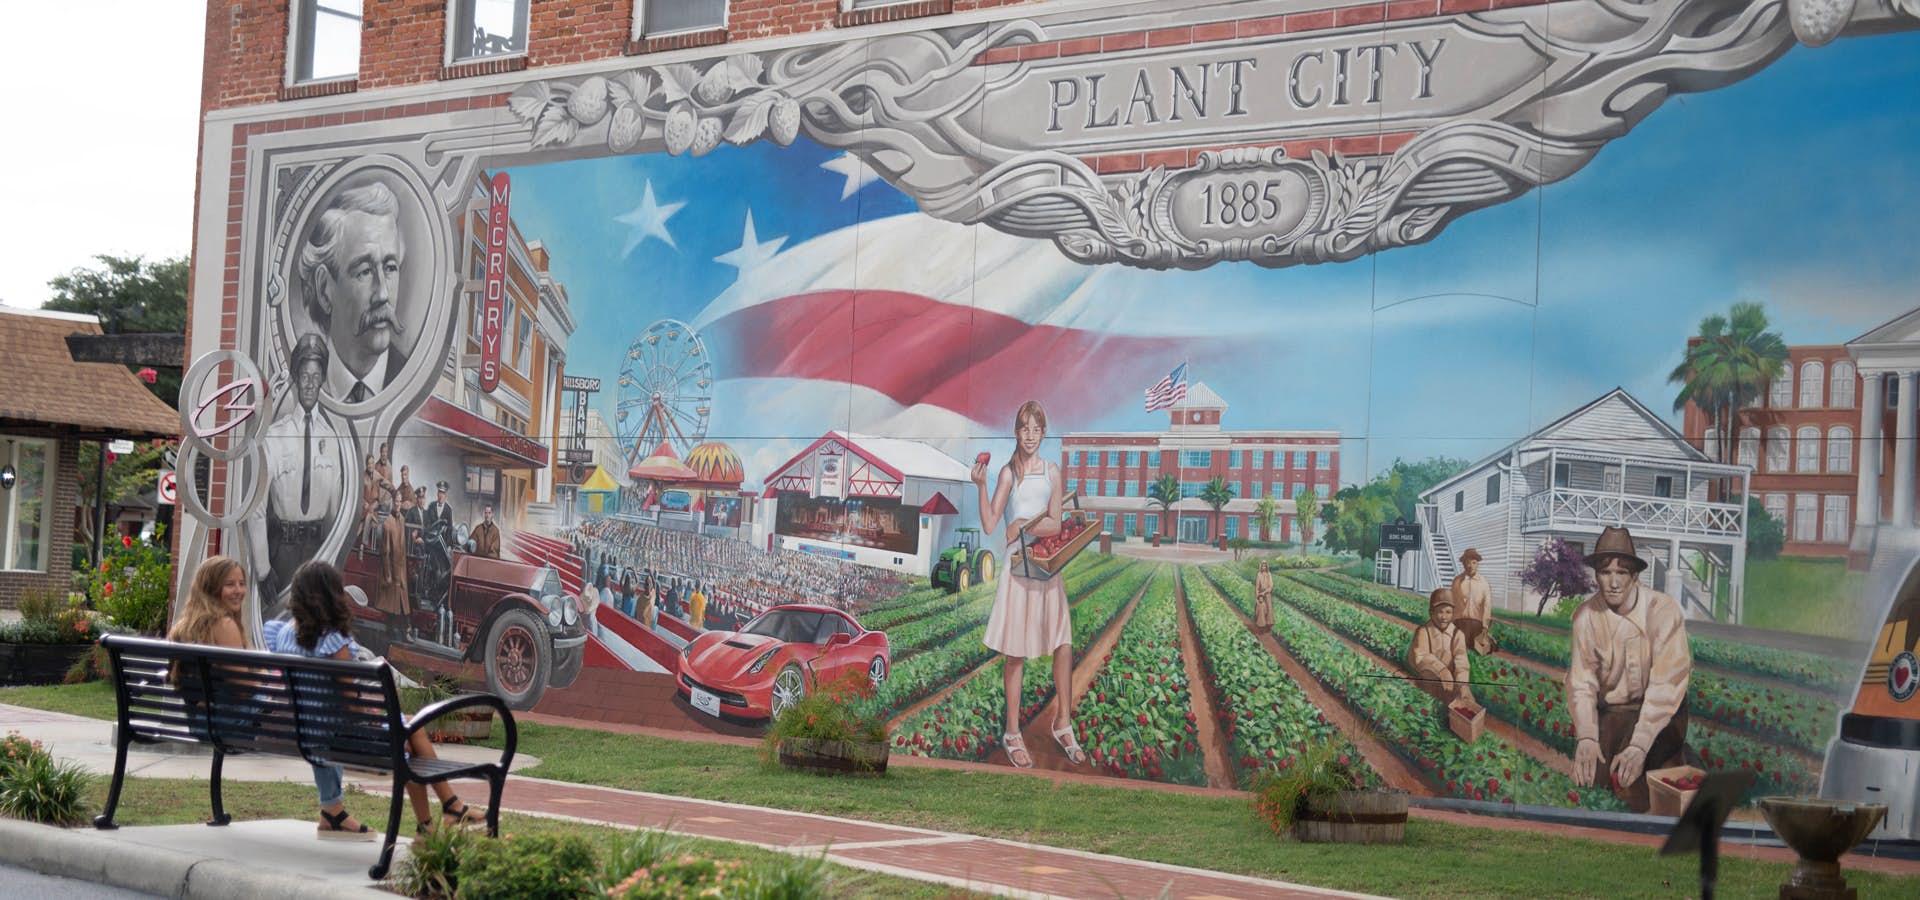 Historic downtown Plant City, Florida